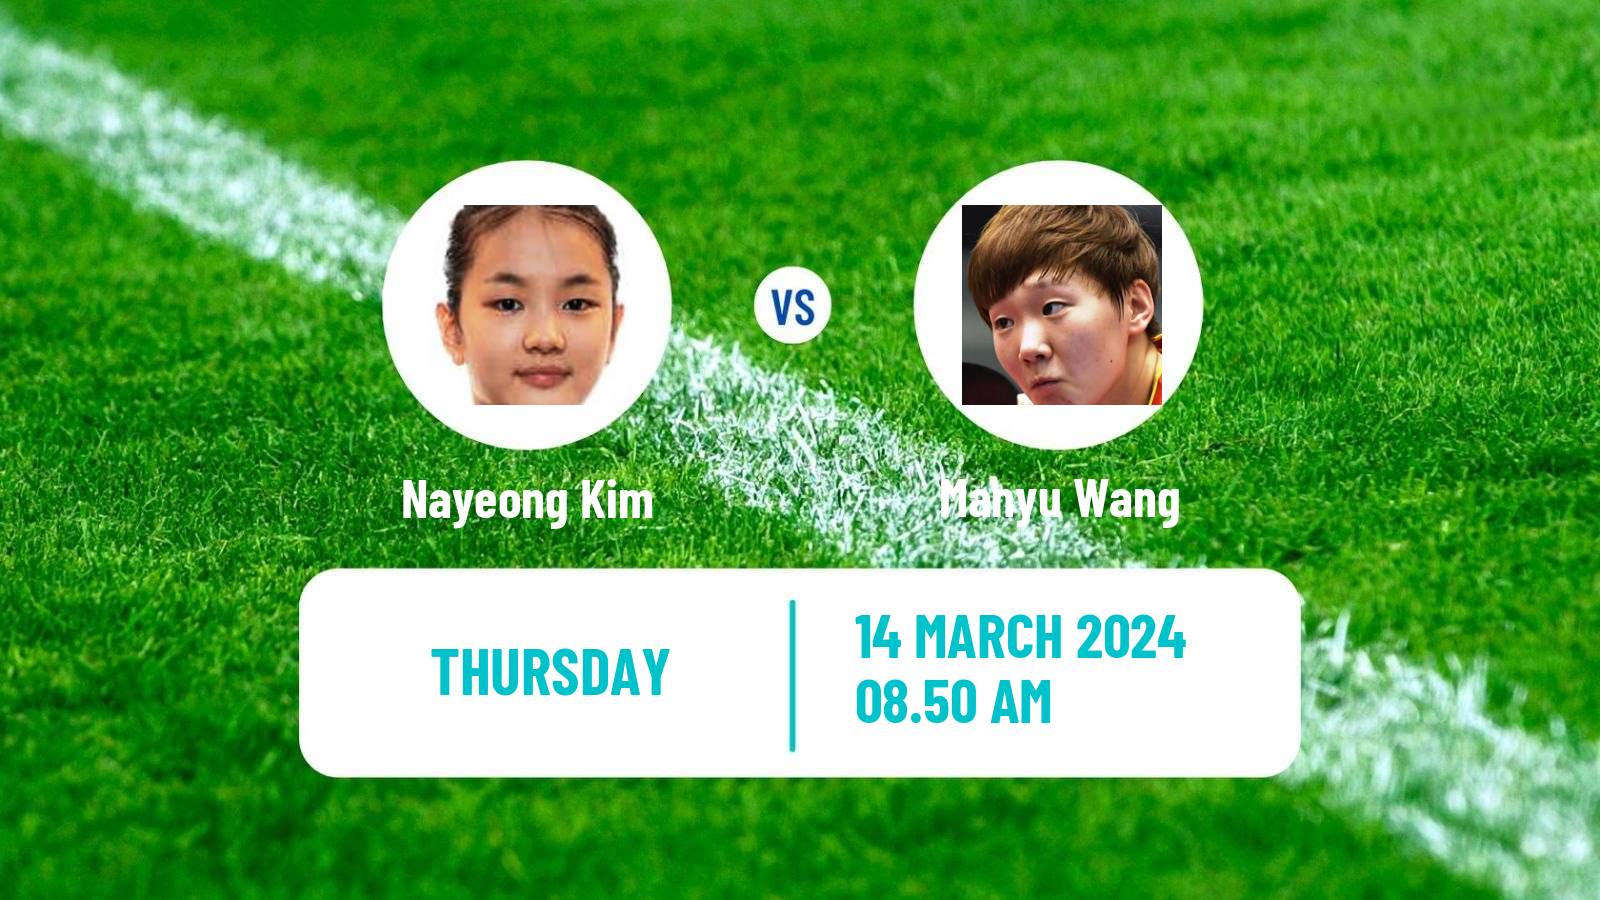 Table tennis Singapore Smash Women Nayeong Kim - Manyu Wang